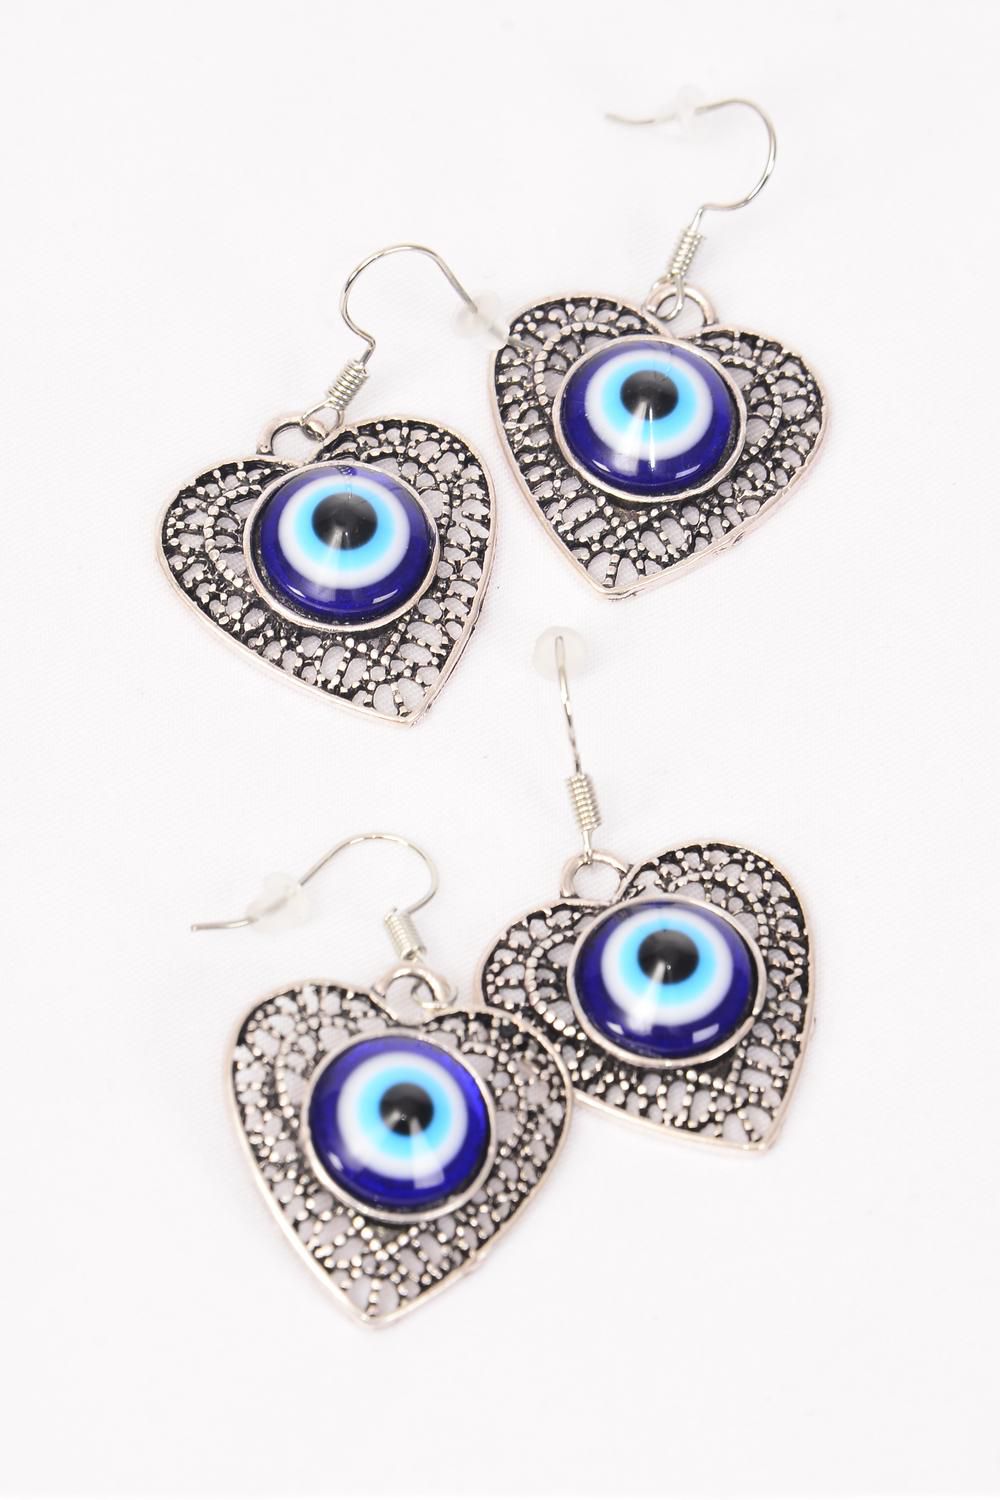 Blue Venetian Glass Hamsa Evil Eye Heart Good Luck And Protection Earrings 02929